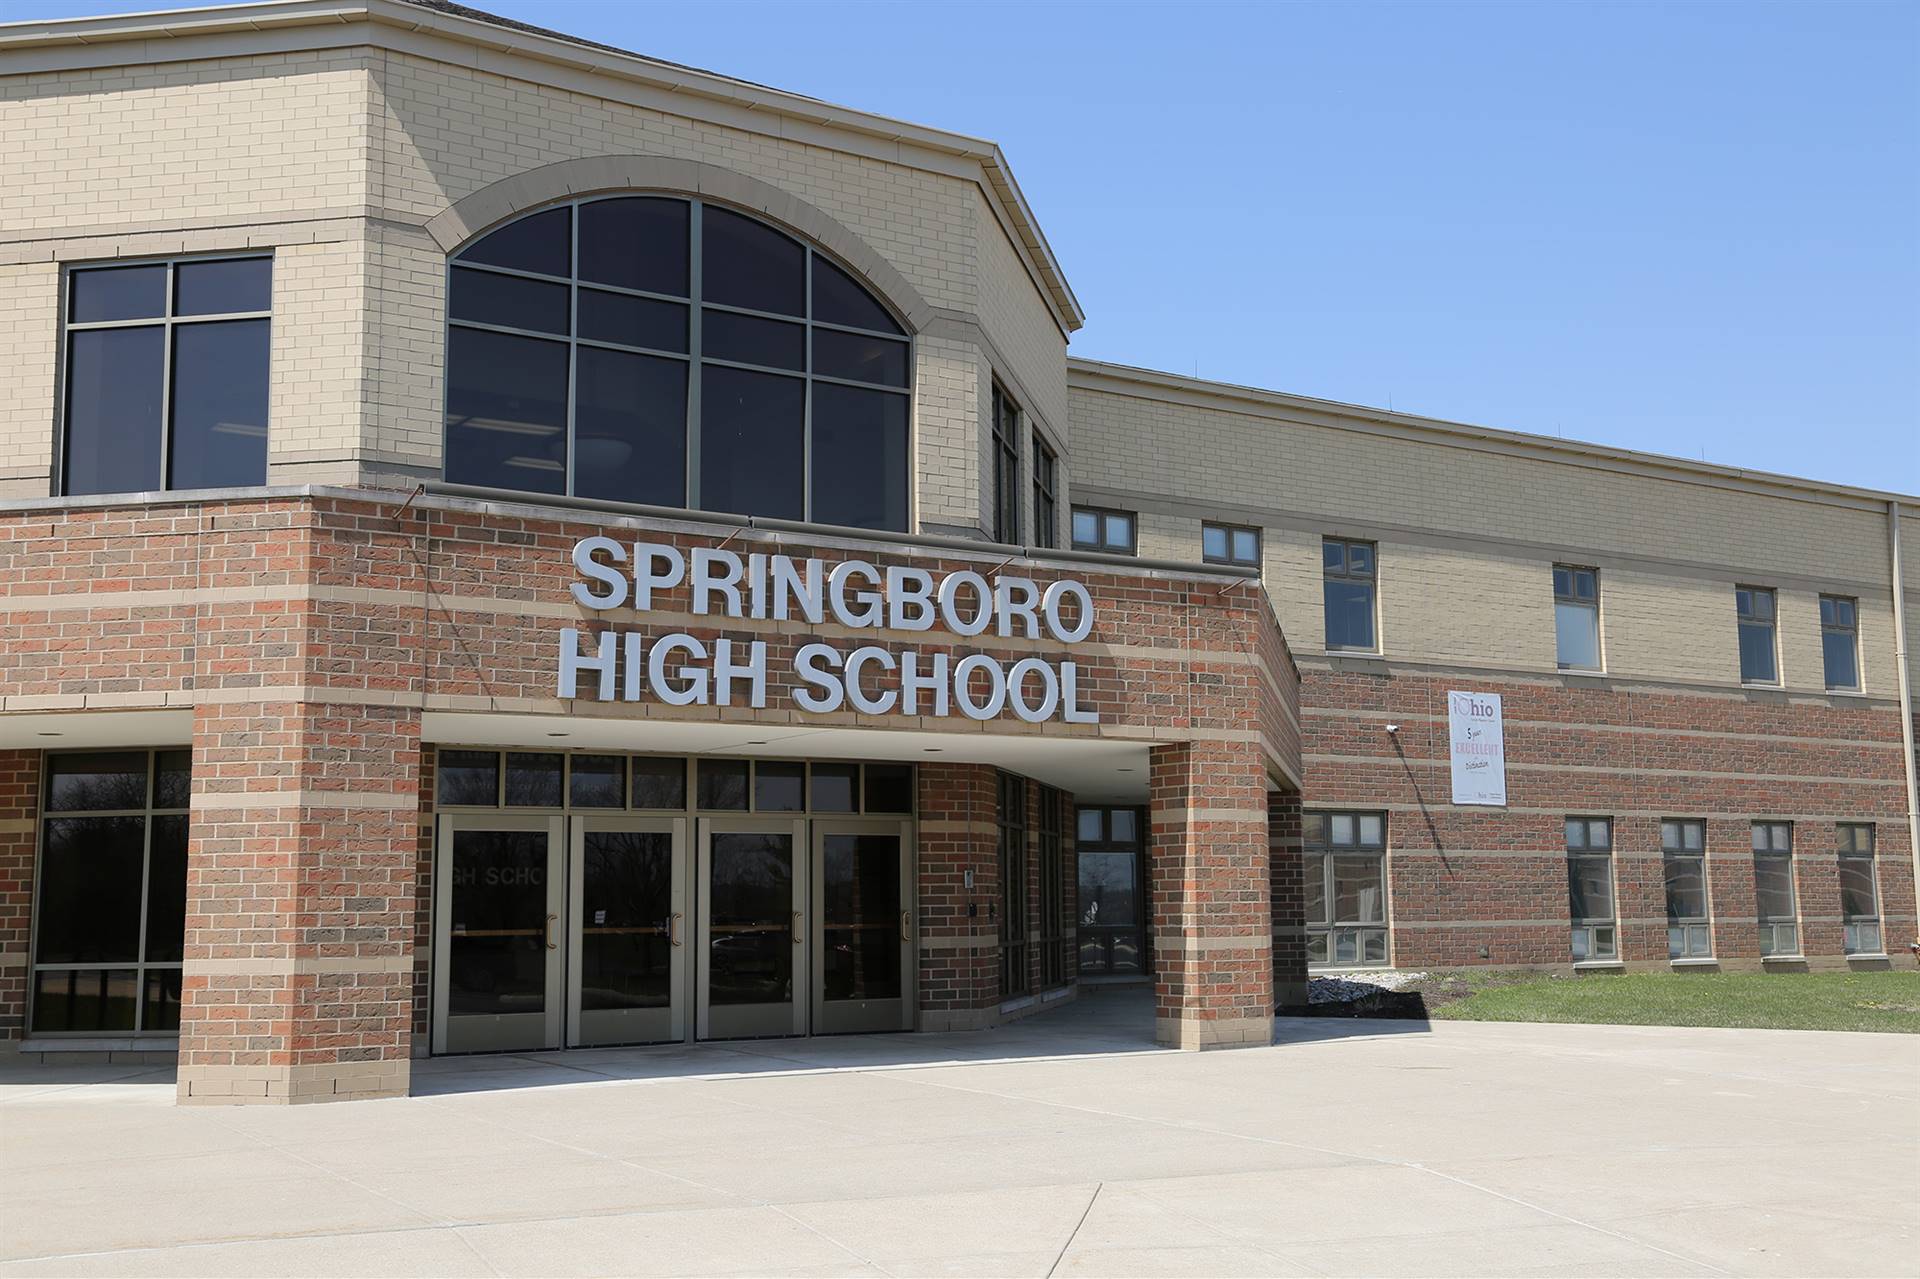 Springboro High School